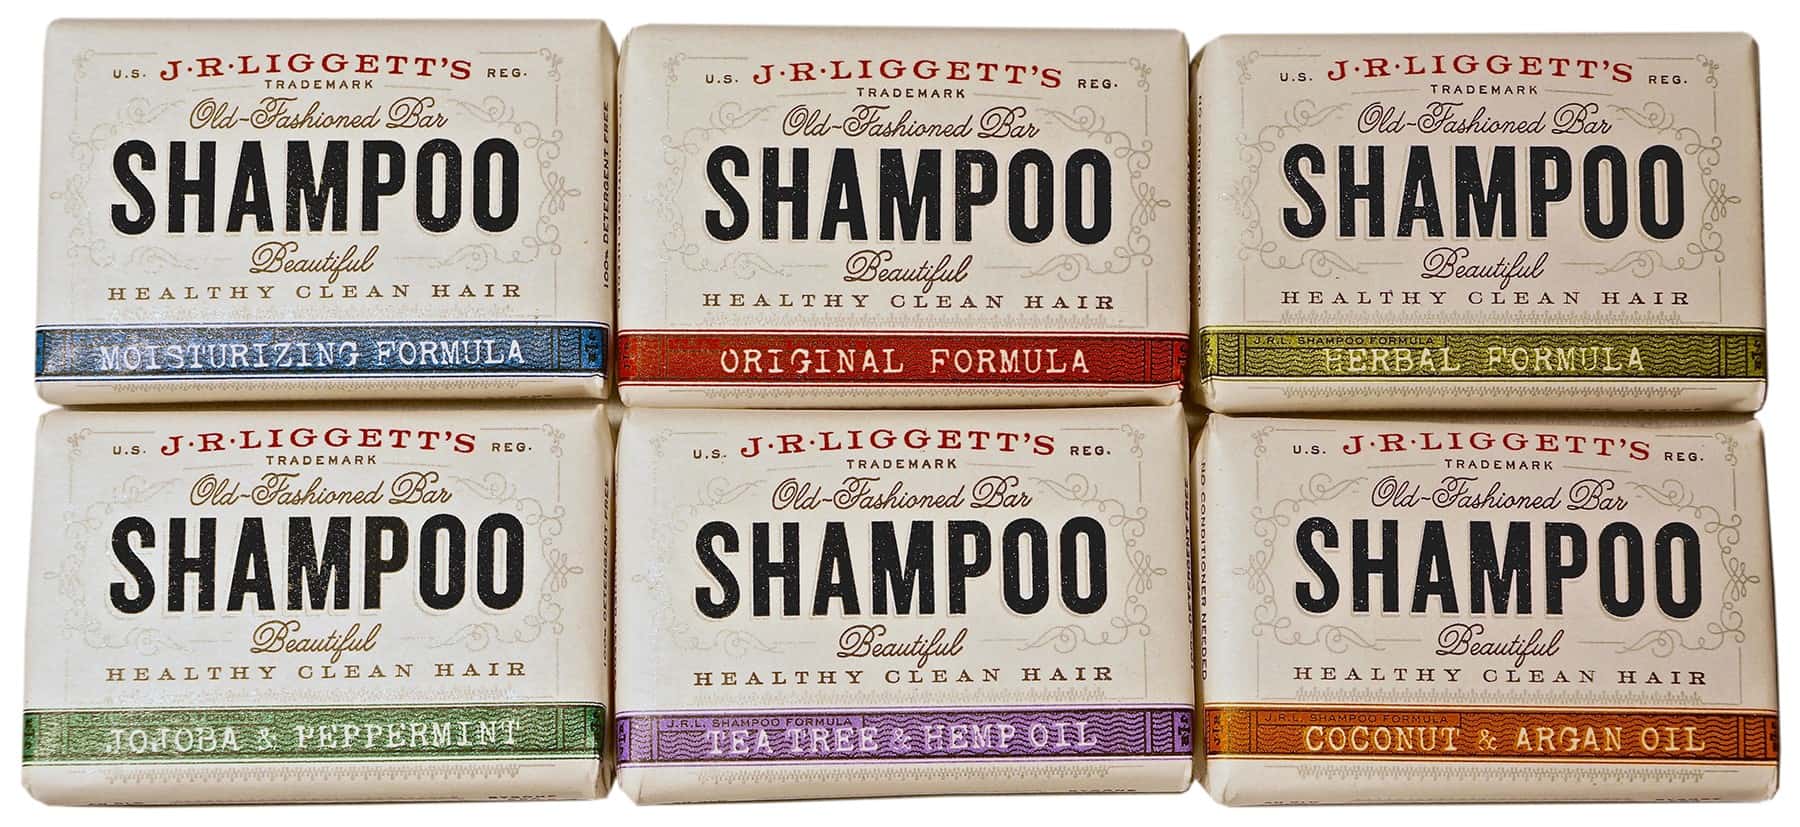 J.R. Liggett's shampoo bars.